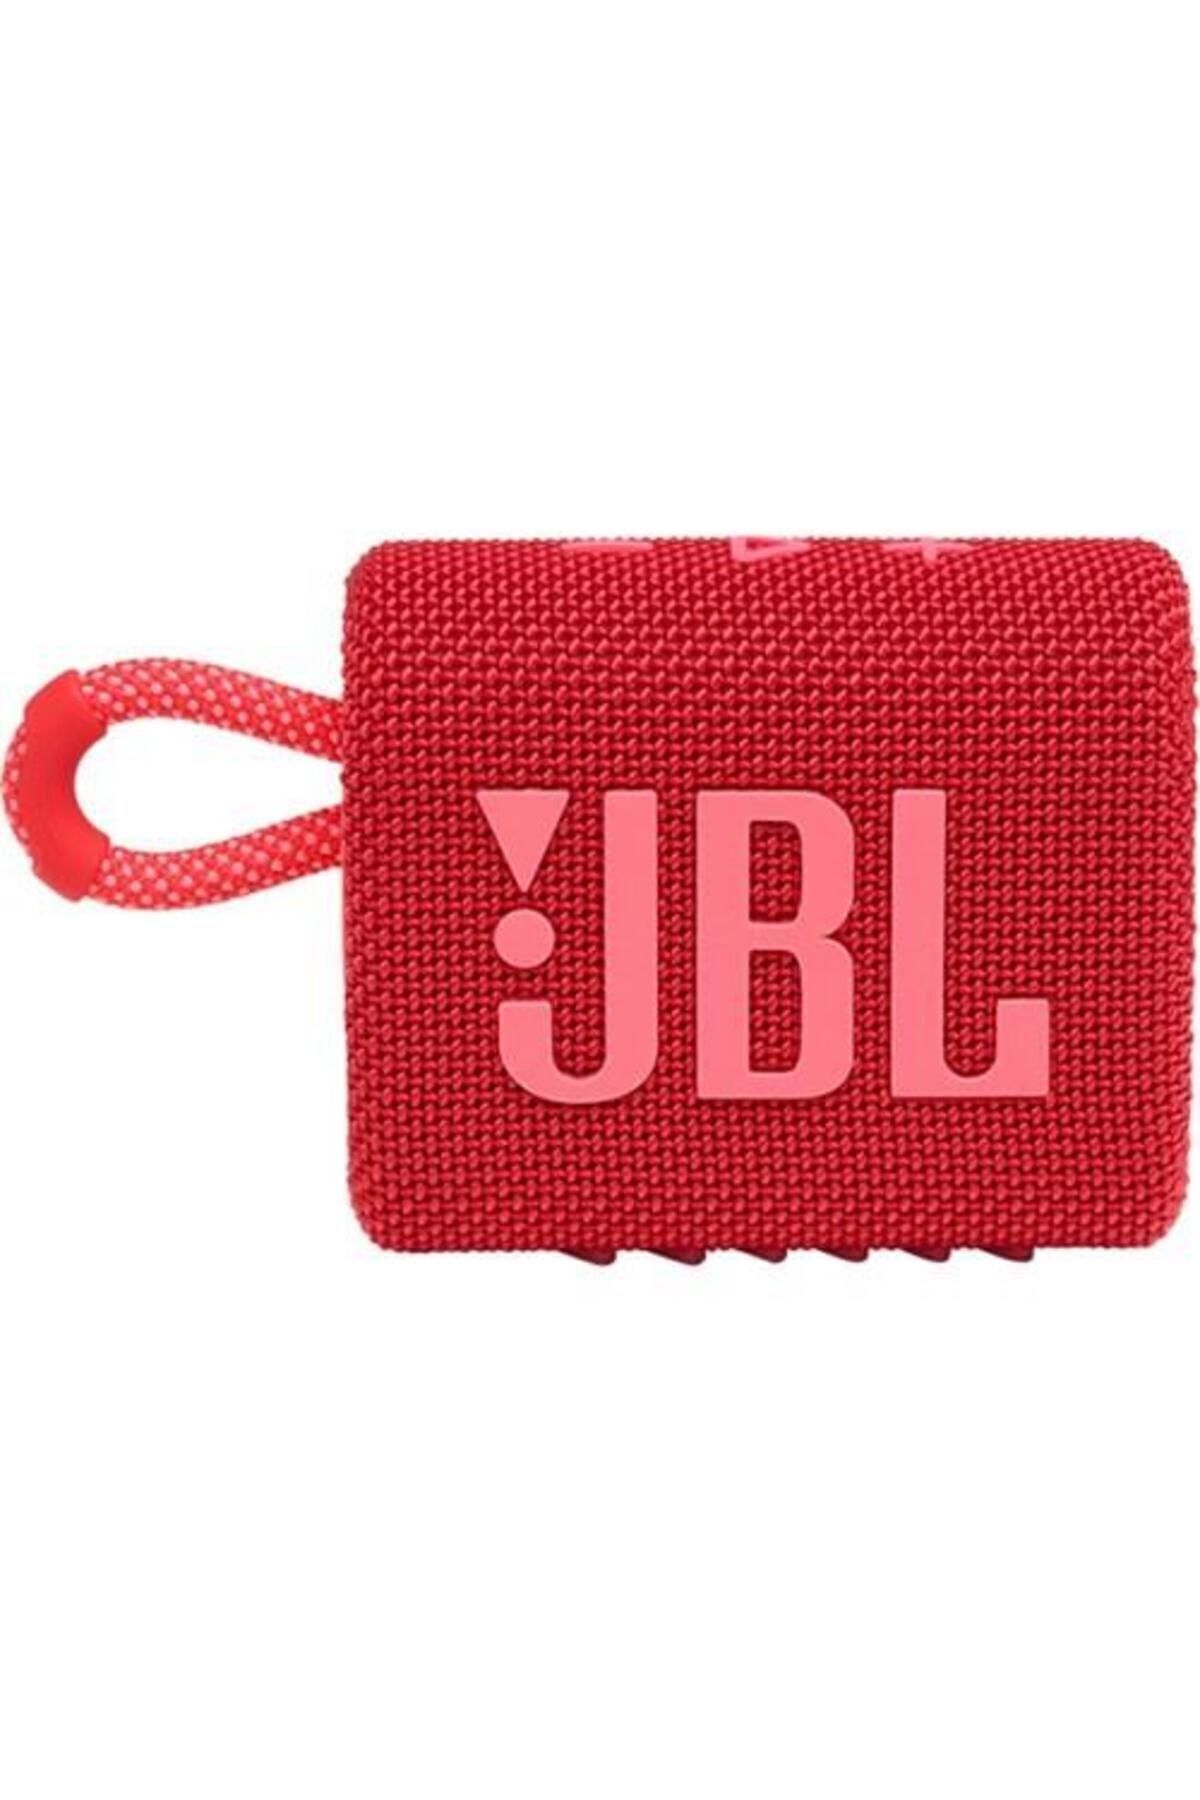 JBL Go3 Bluetooth Speaker Red